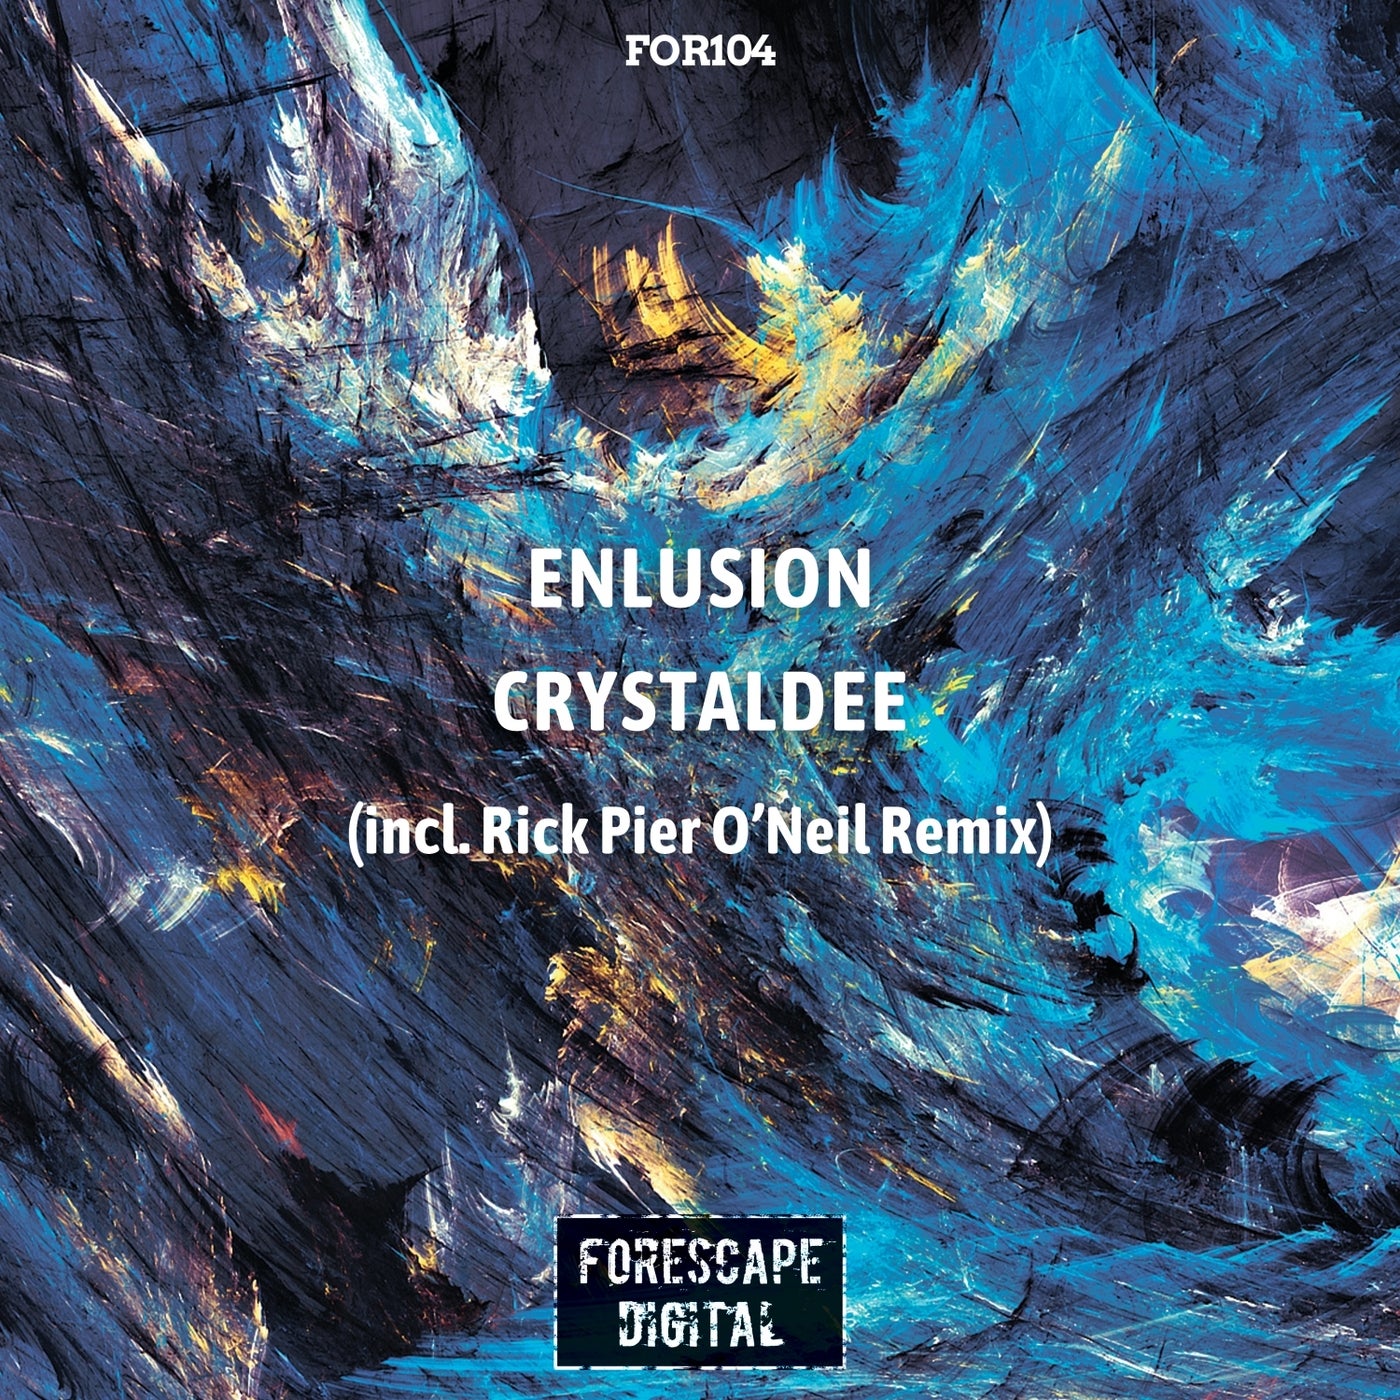 Enlusion - Crystaldee [FOR104]